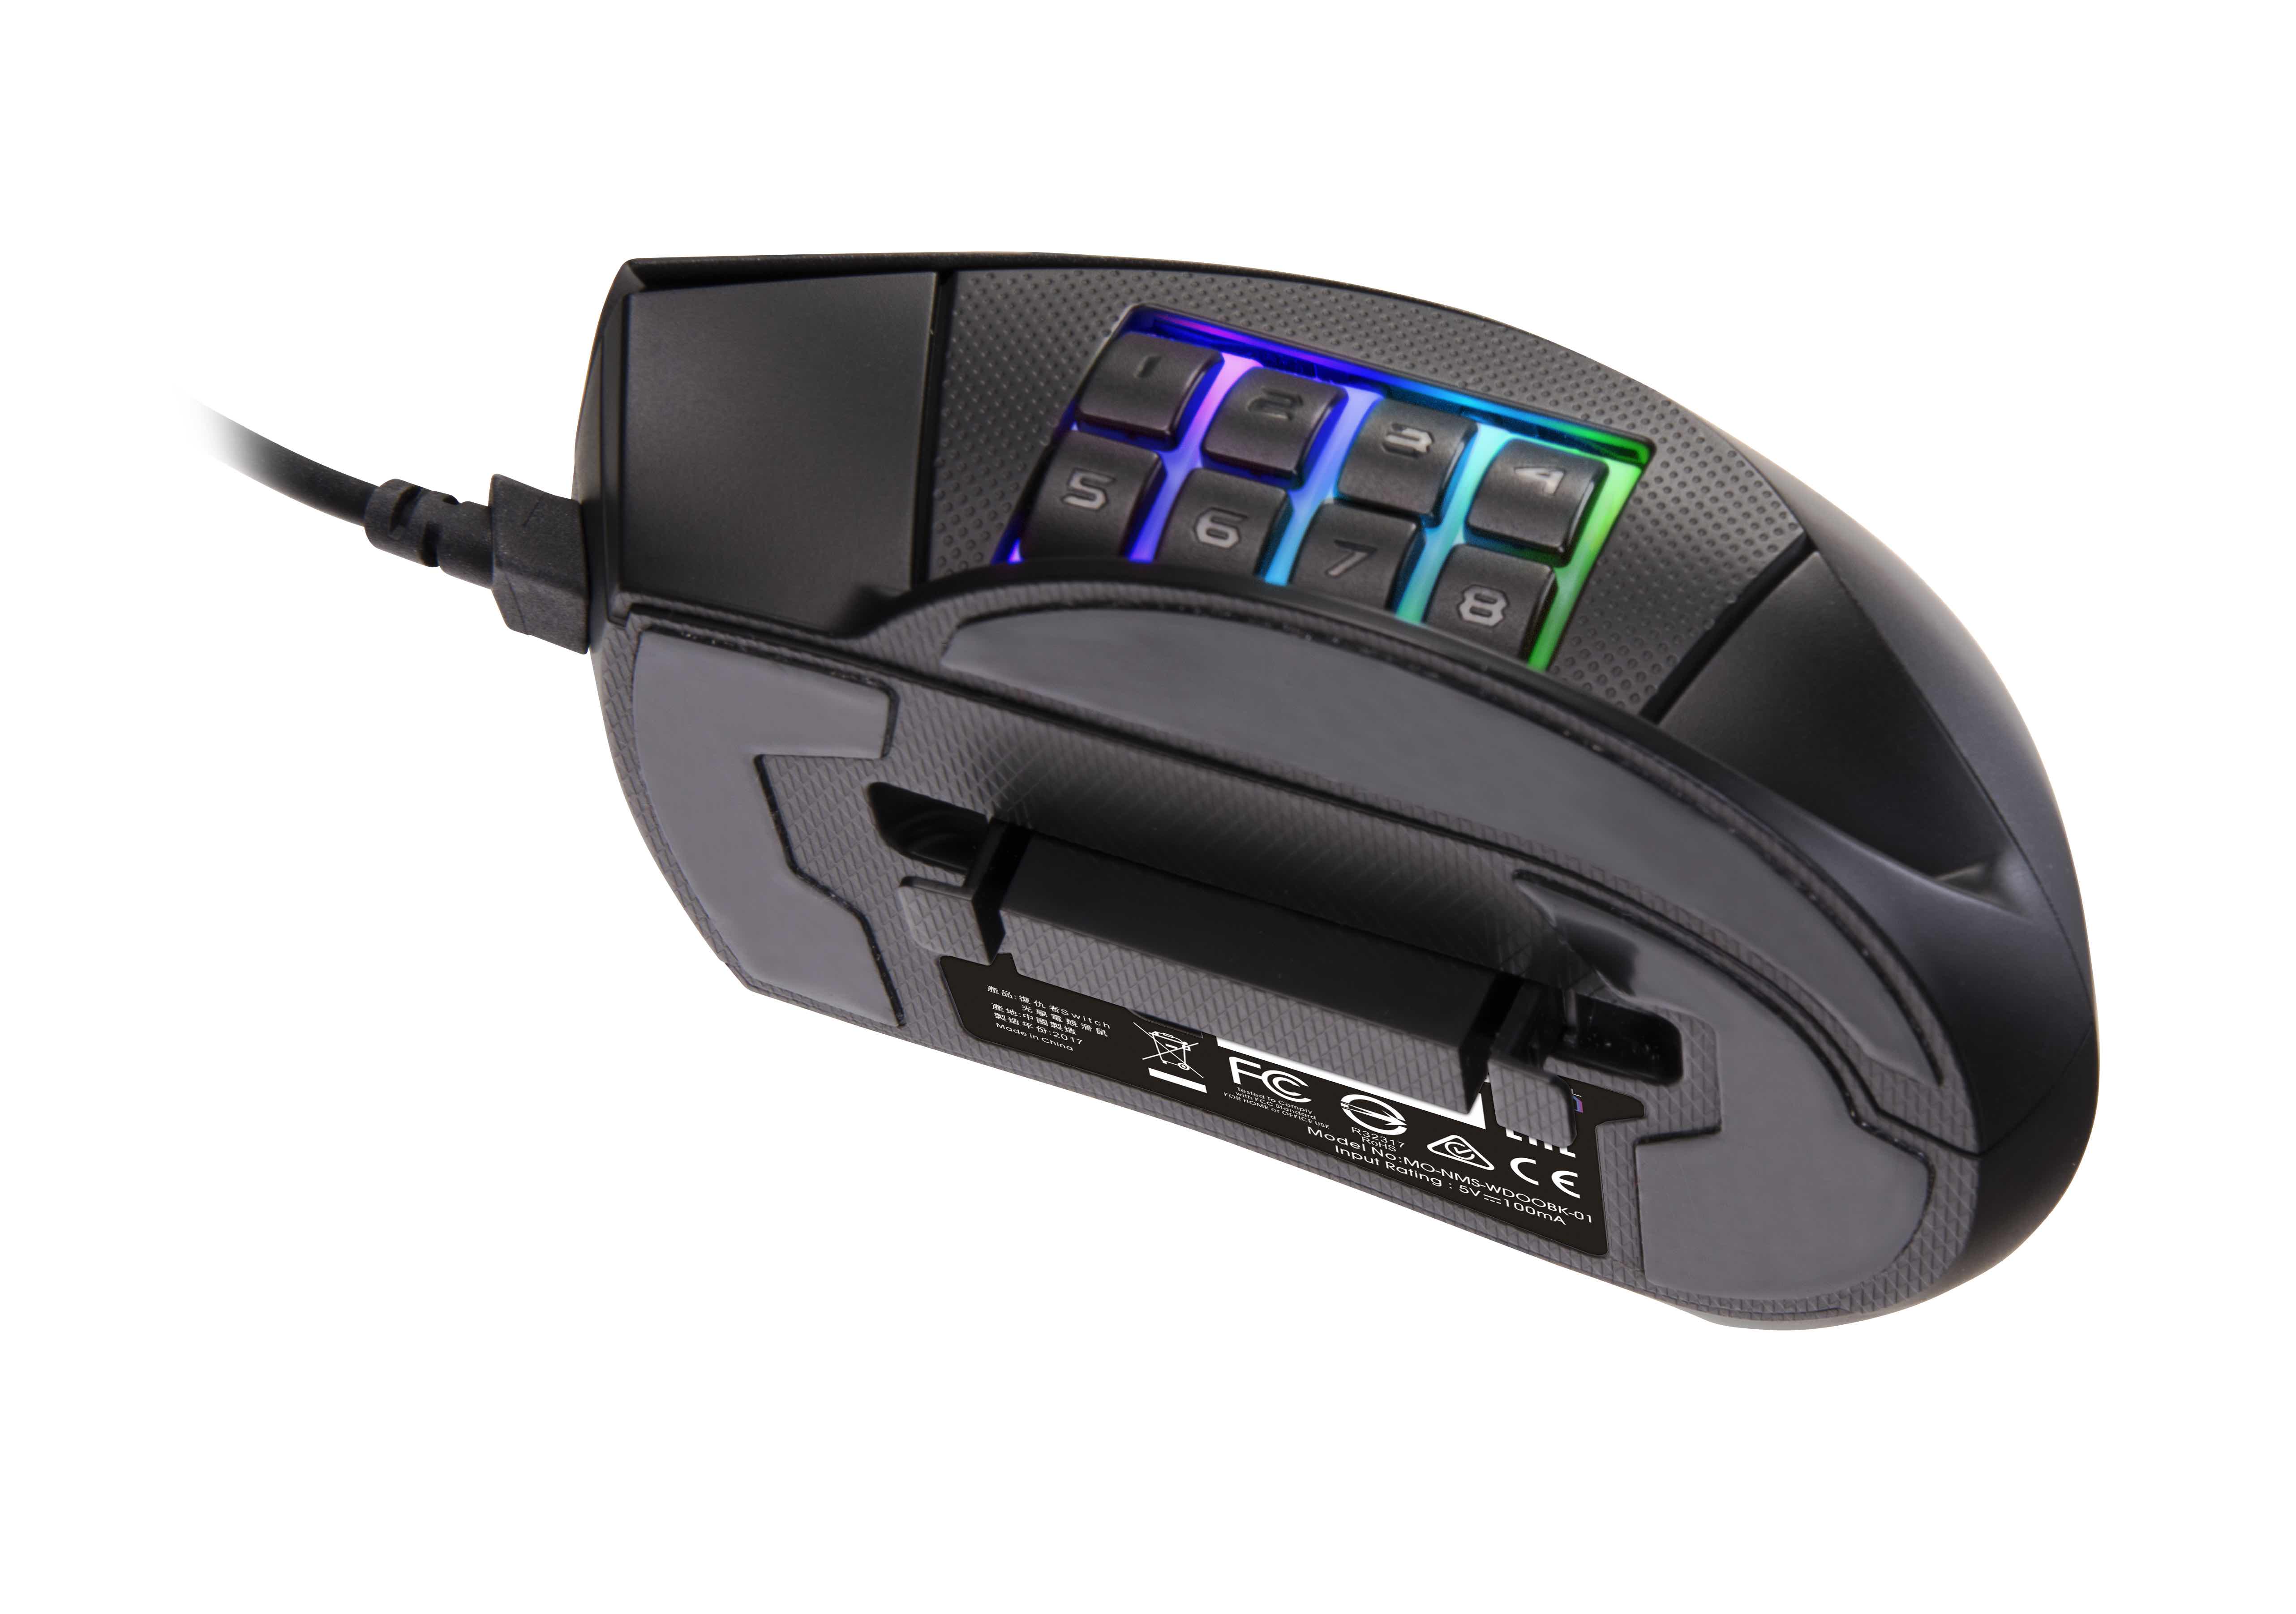 Tt eSPORTS NEMESIS Switch Optical RGB Gaming Mouse 8